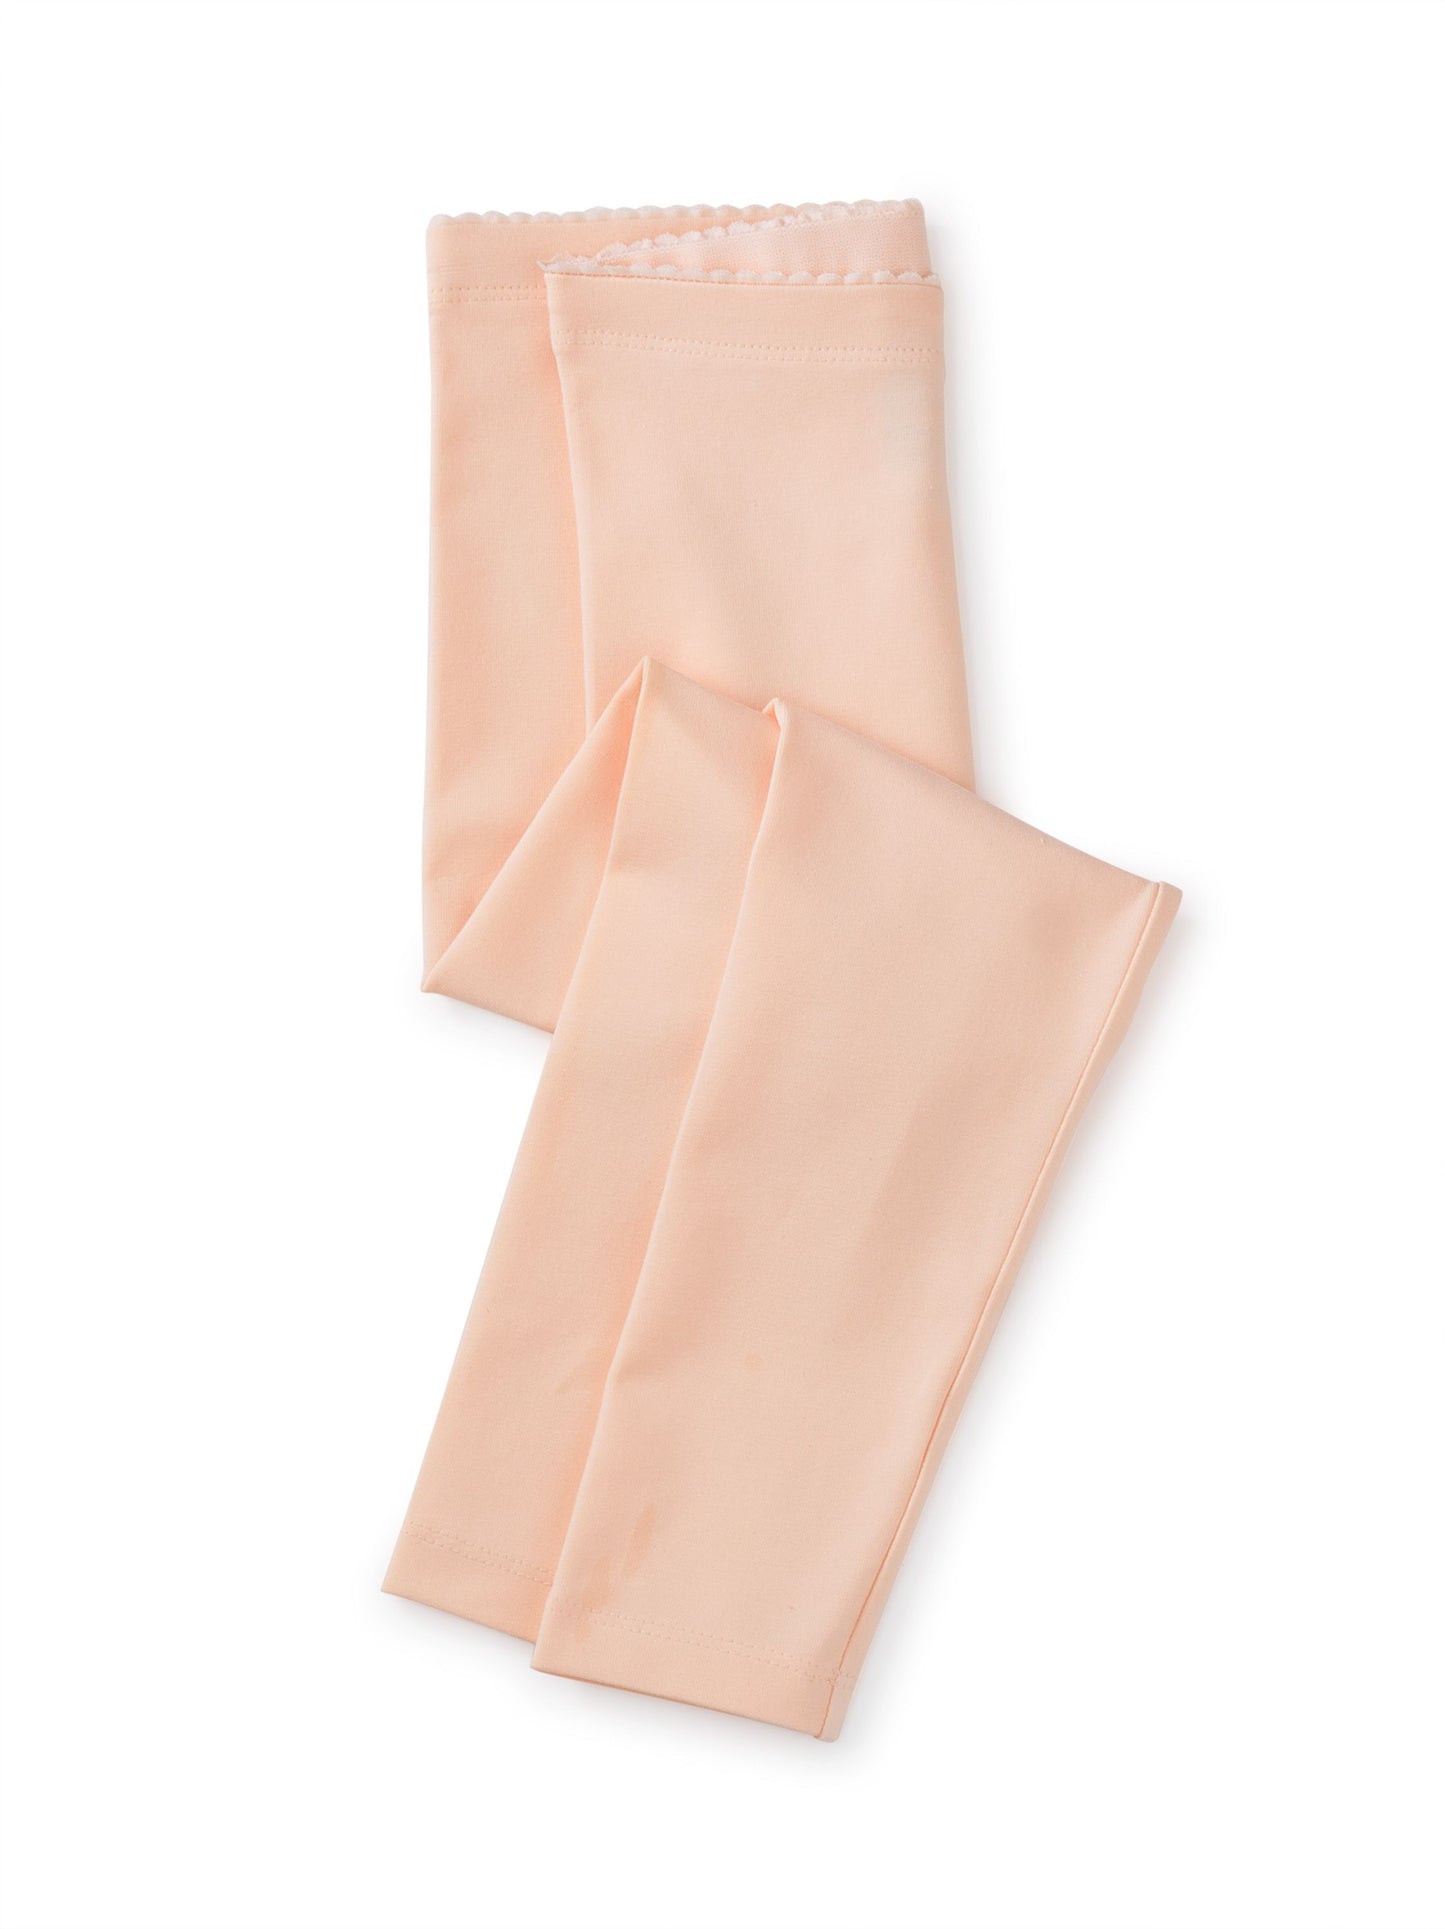 Solid Leggings - Creole Pink